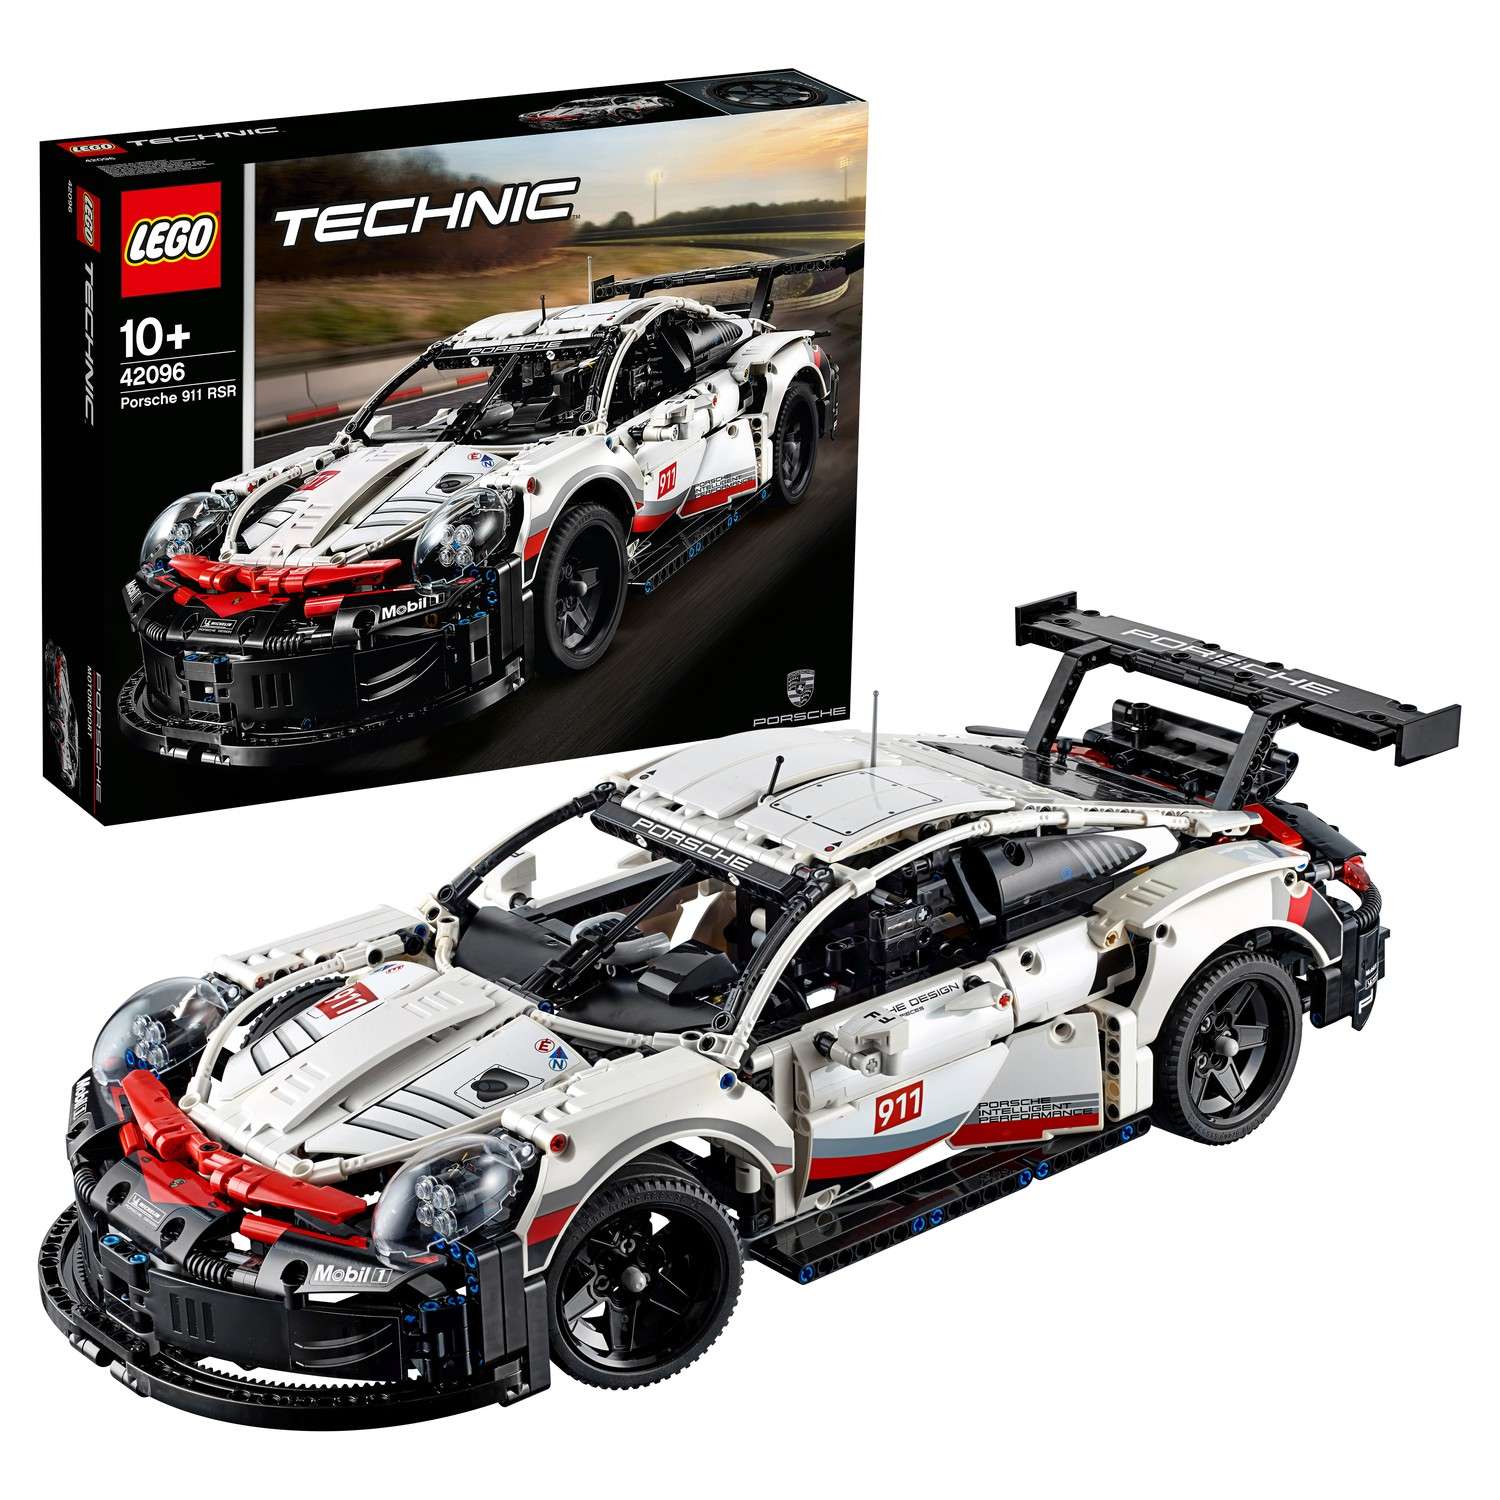 Конструктор LEGO Technic Porsche 911 RSR 42096 - фото 1